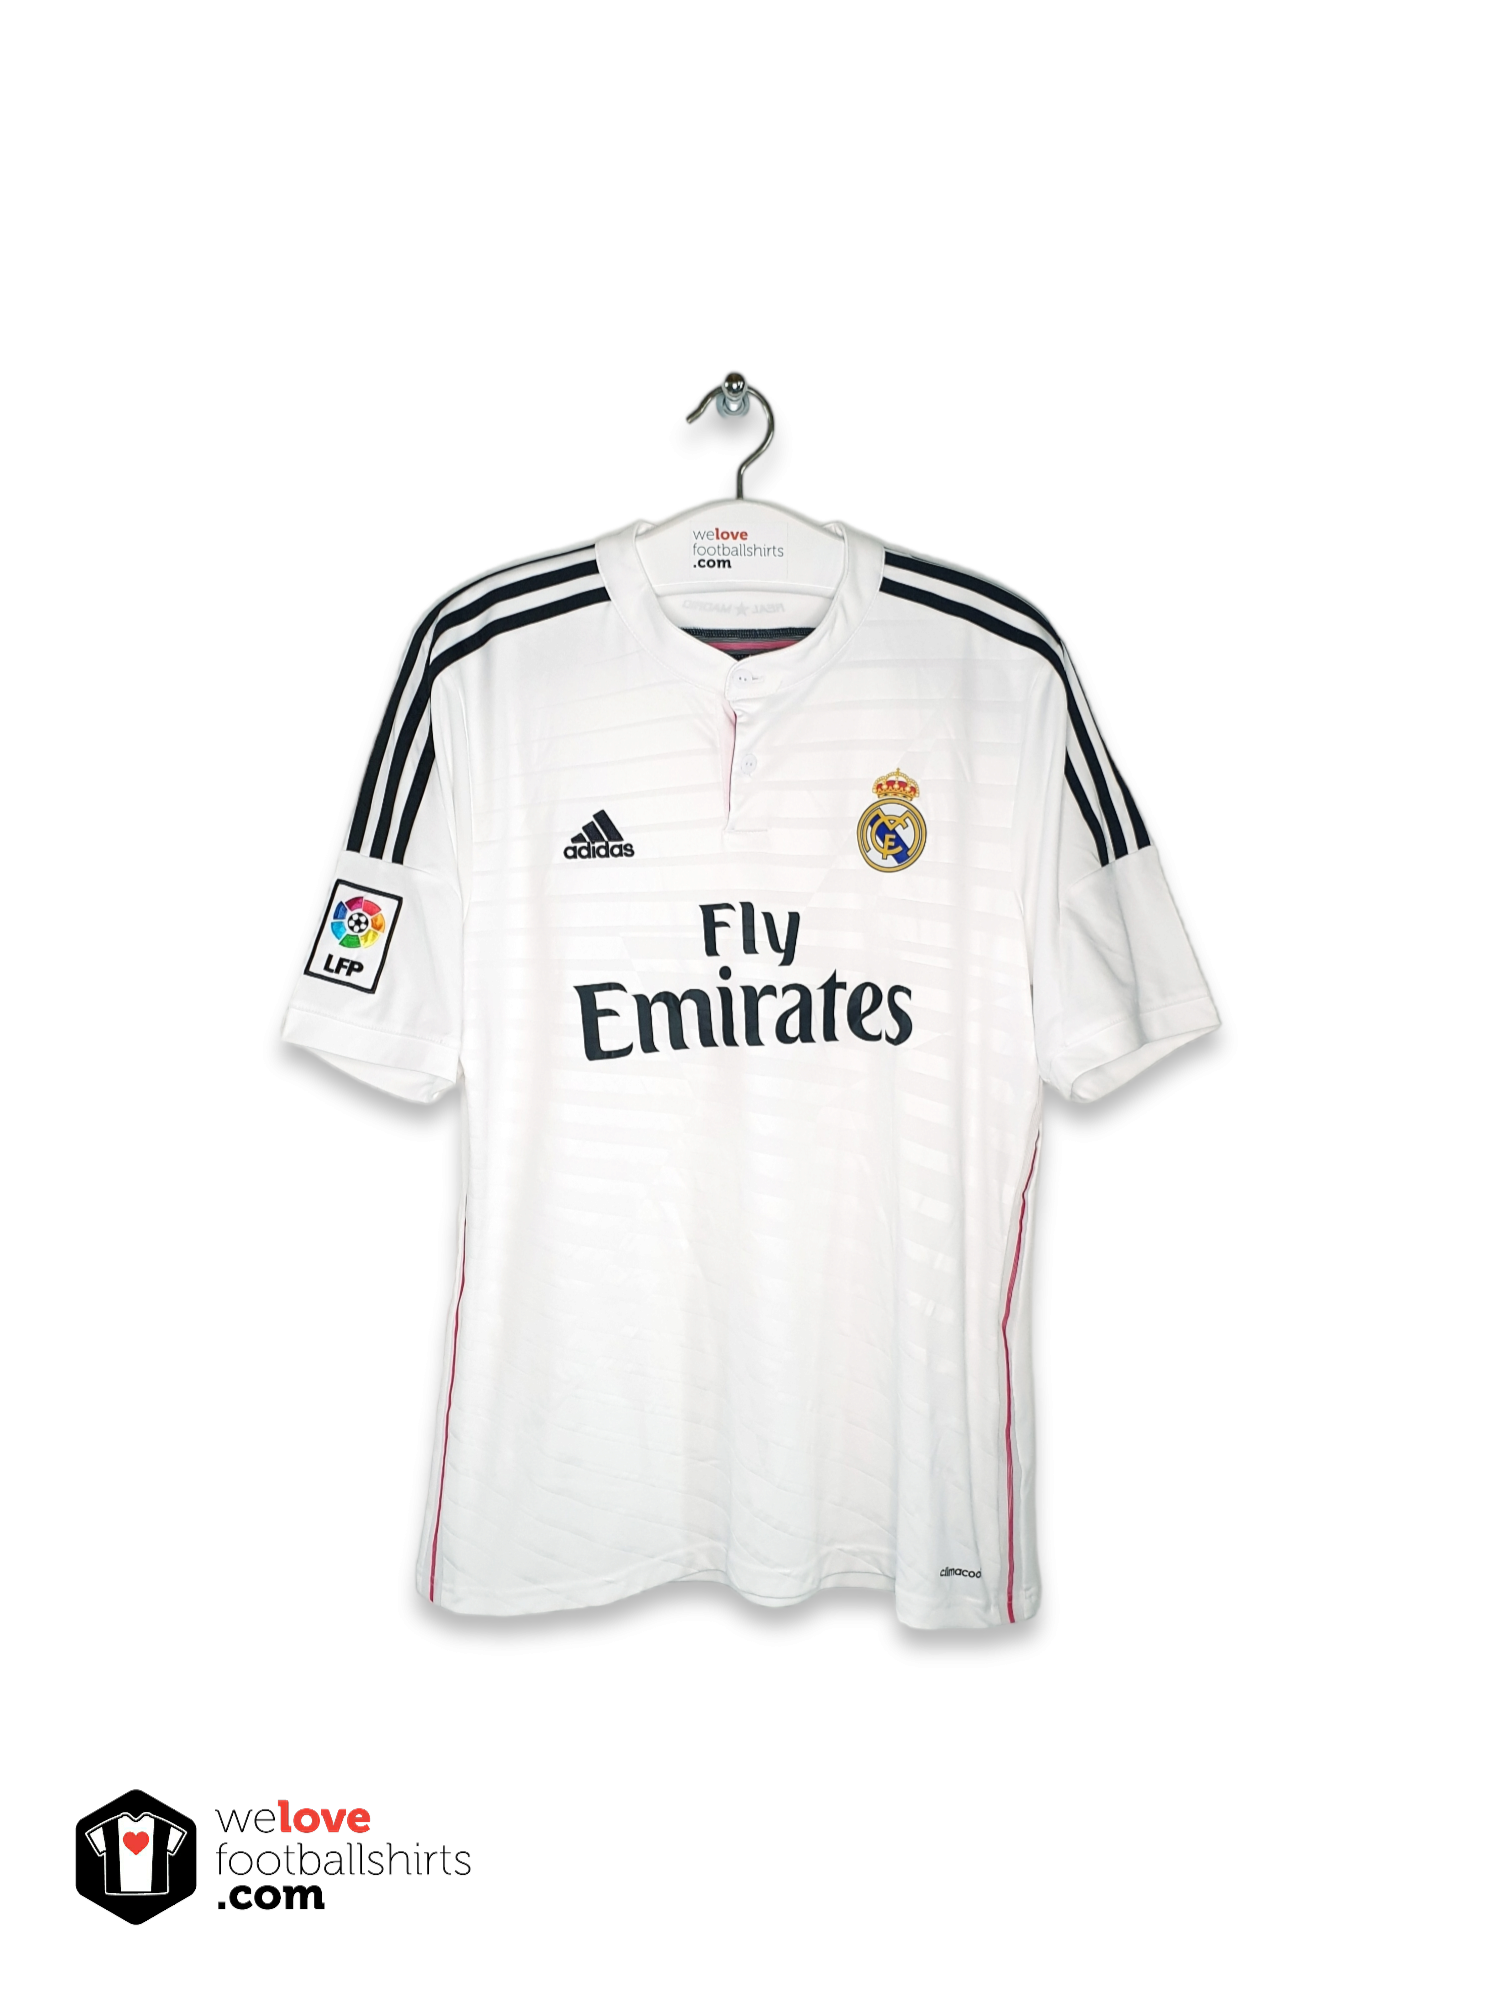 ADIDAS Emirates Fly Better Soccer Football Jersey Shirt Maillot Sz Lg White